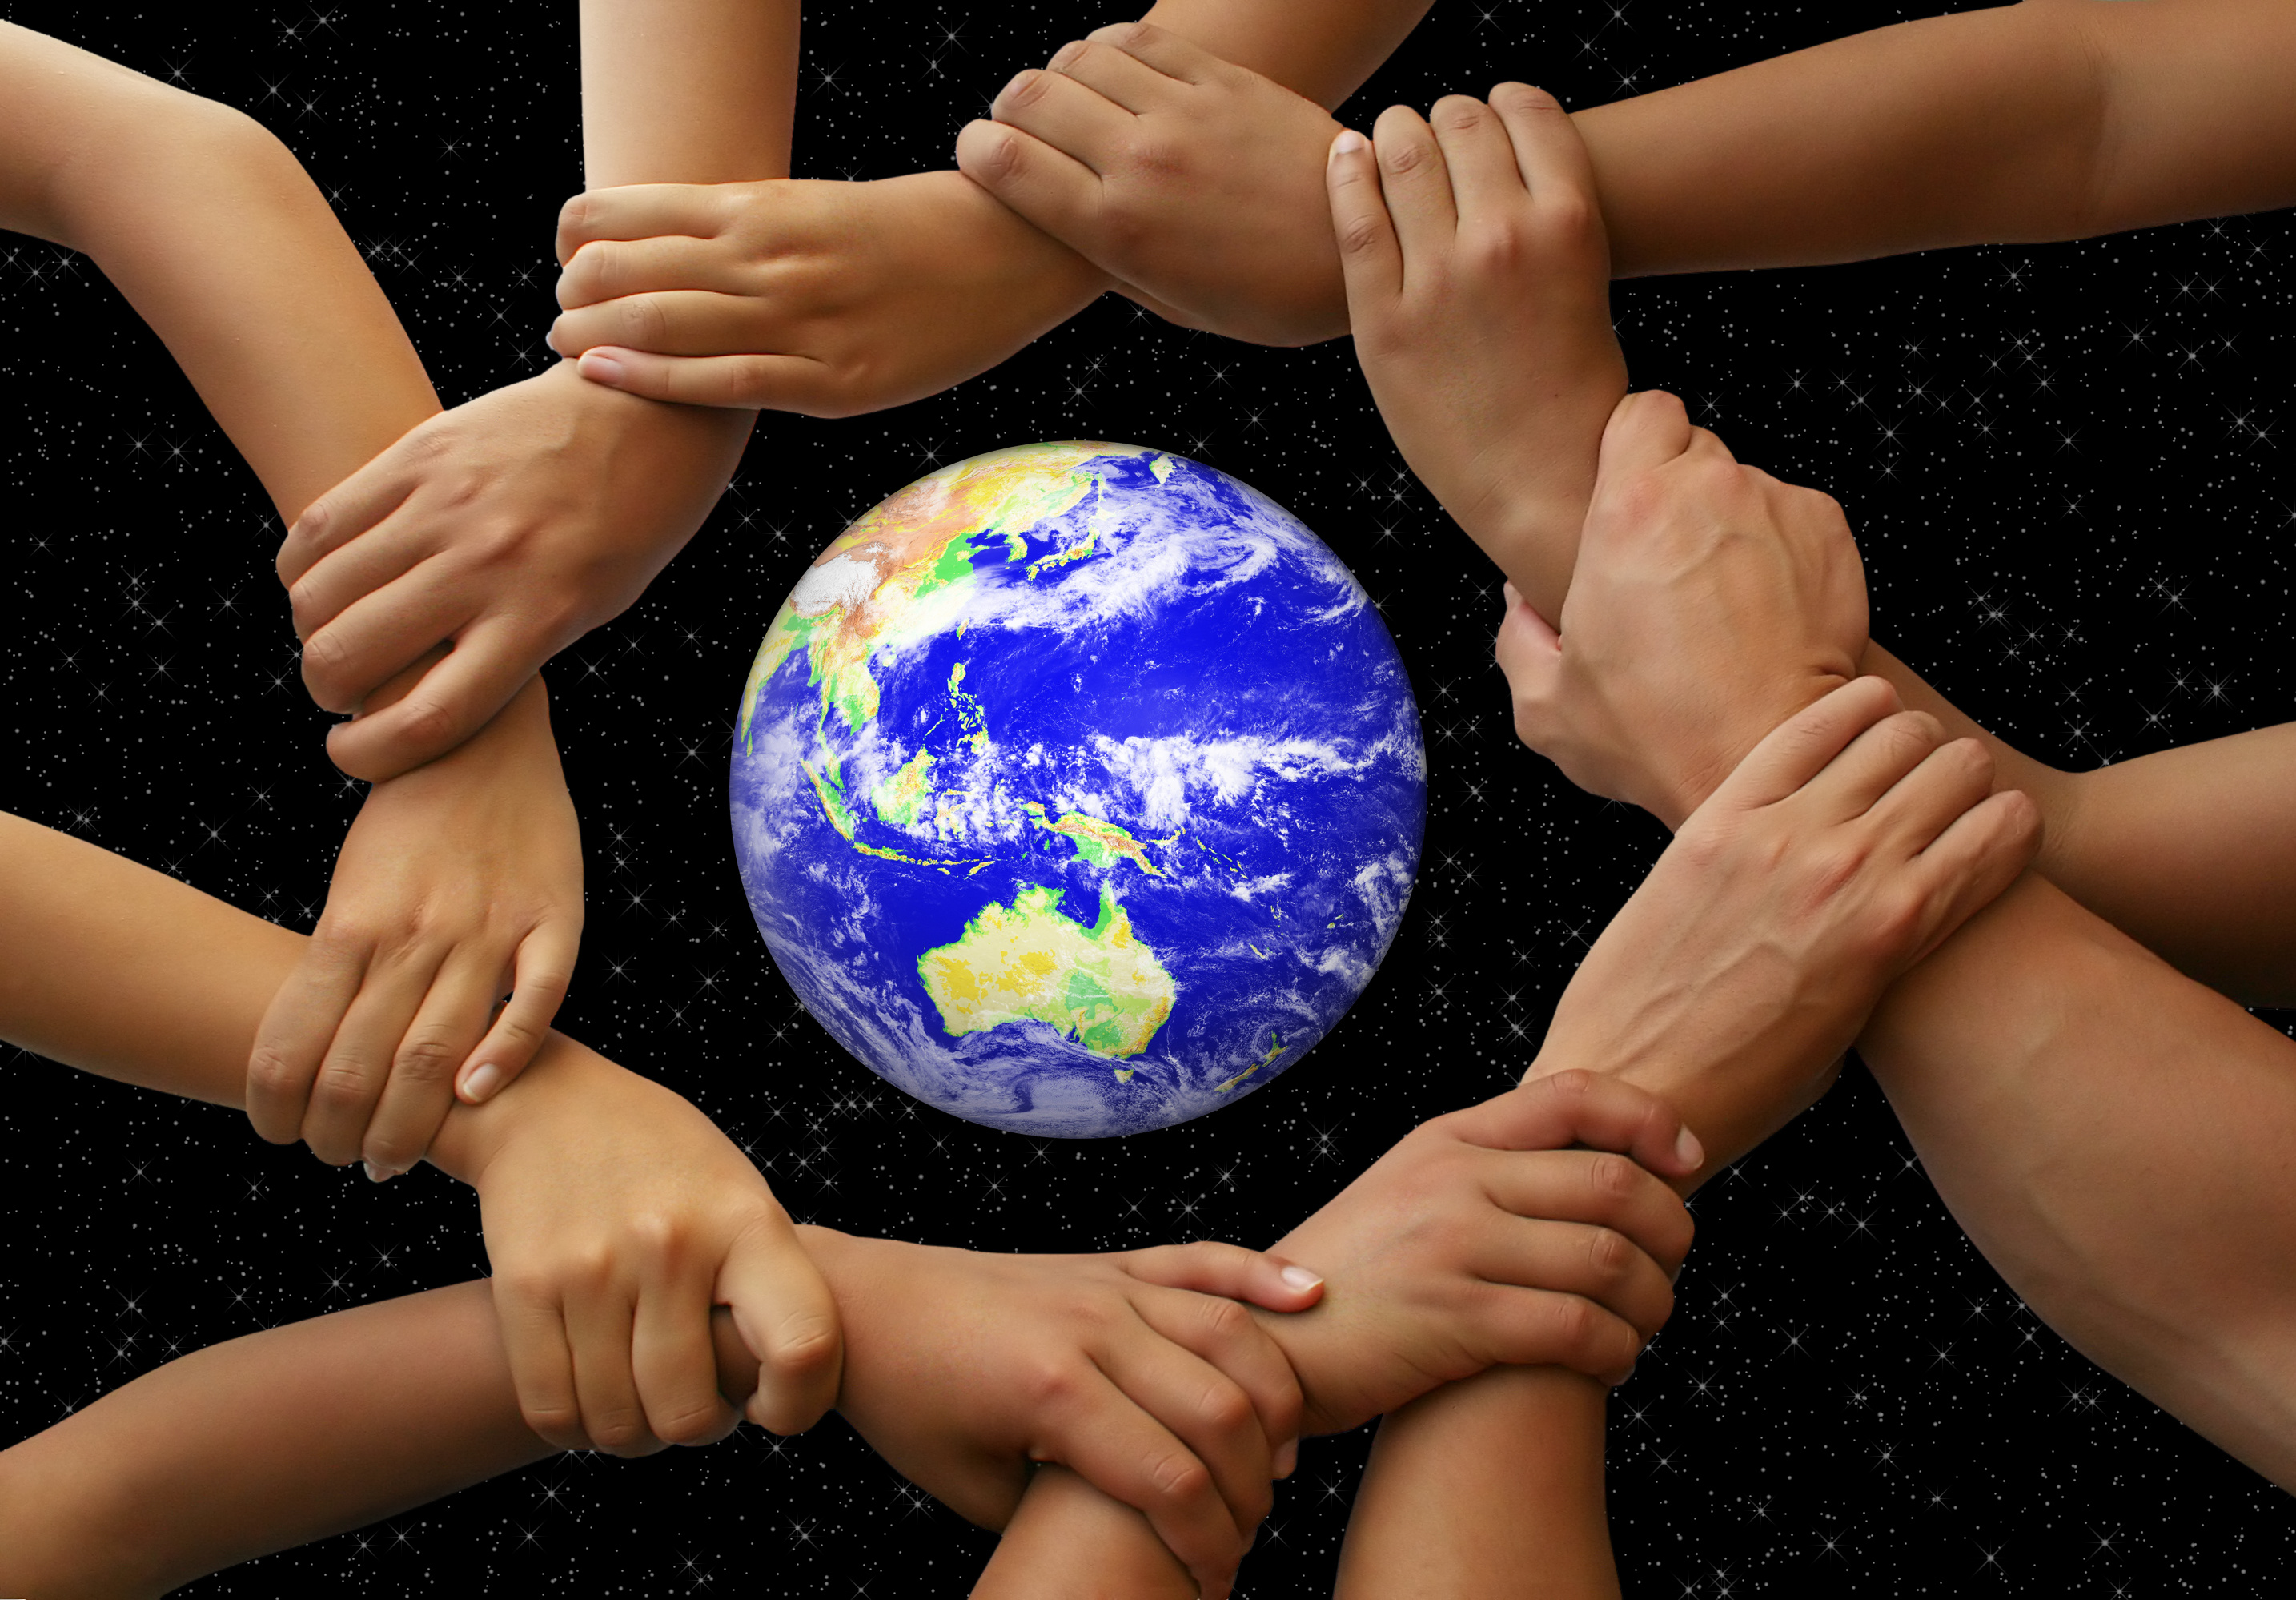 Забочусь о планете. "И на земли мир…". Мир на планете. Дружат люди всей земли. Планета людей.